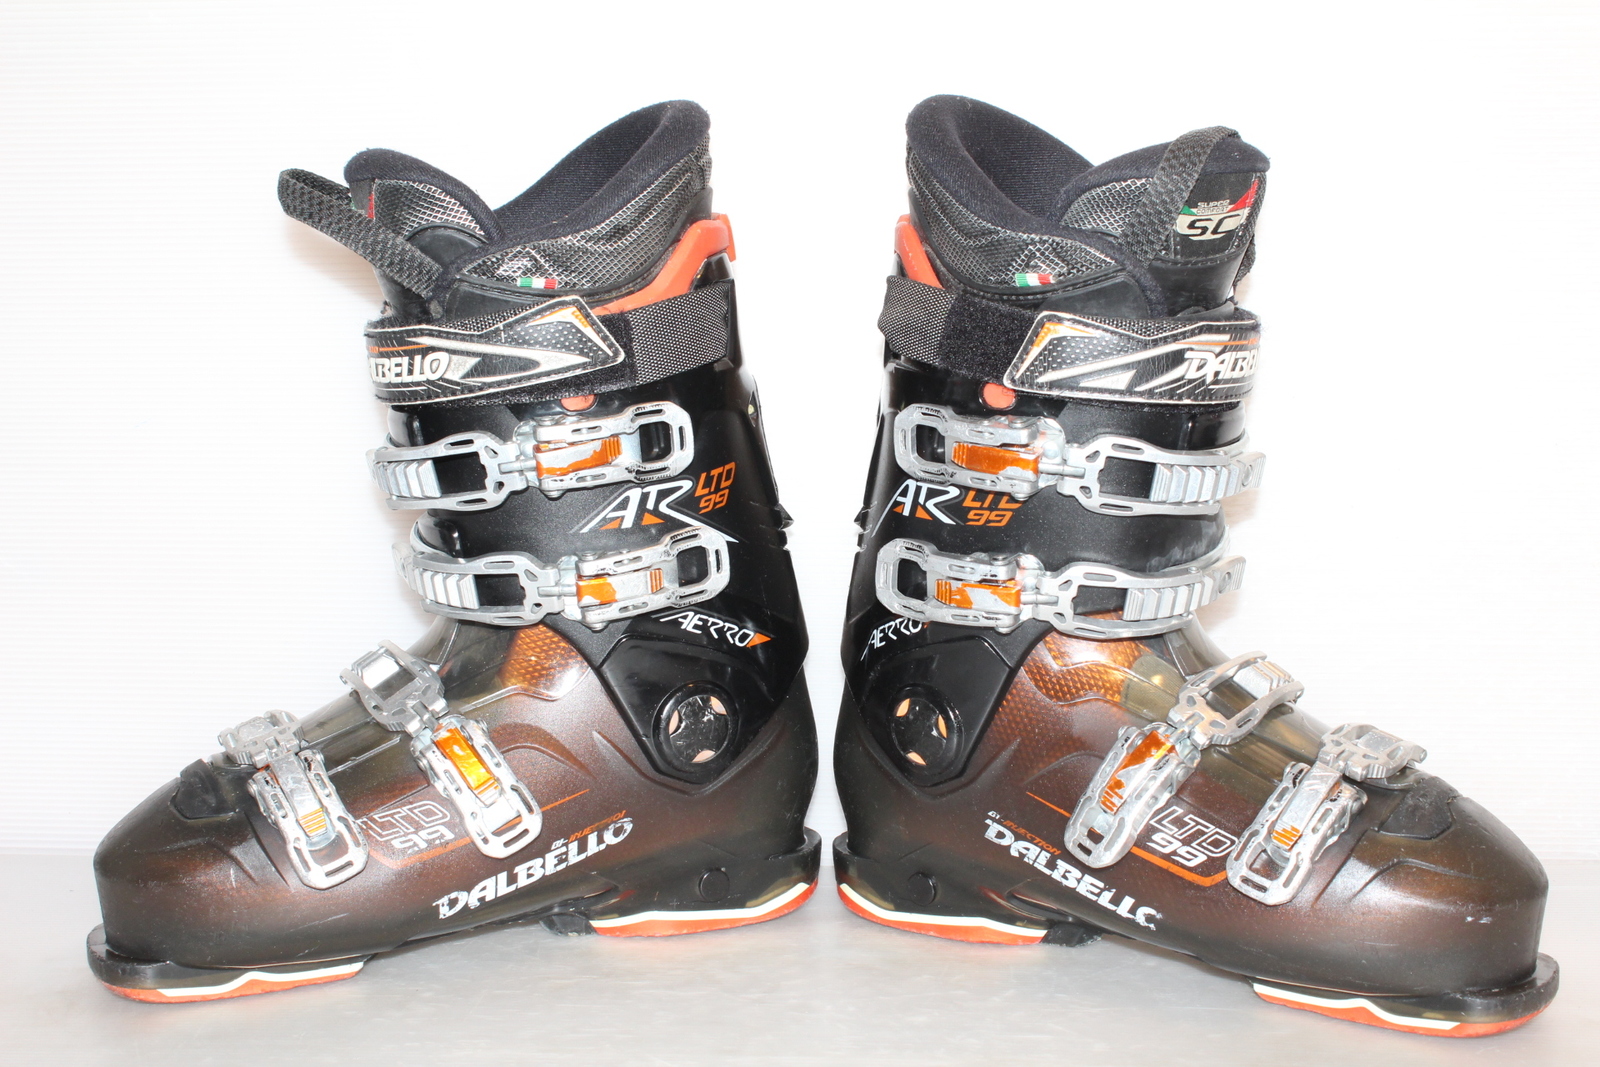 Lyžařské boty Dalbello Aerro LTD 99 vel. EU41 flexe 90